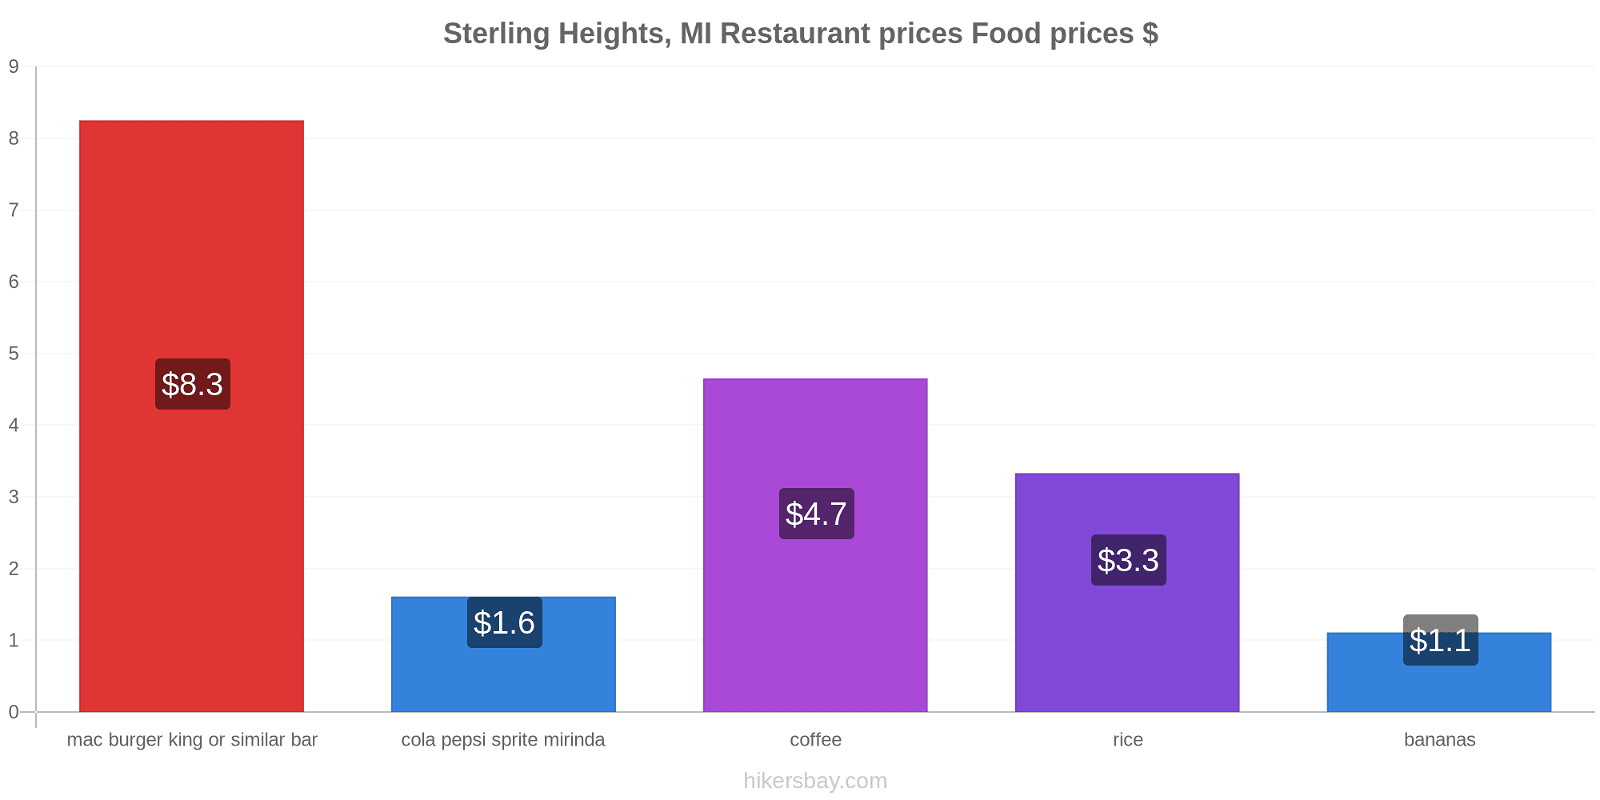 Sterling Heights, MI price changes hikersbay.com